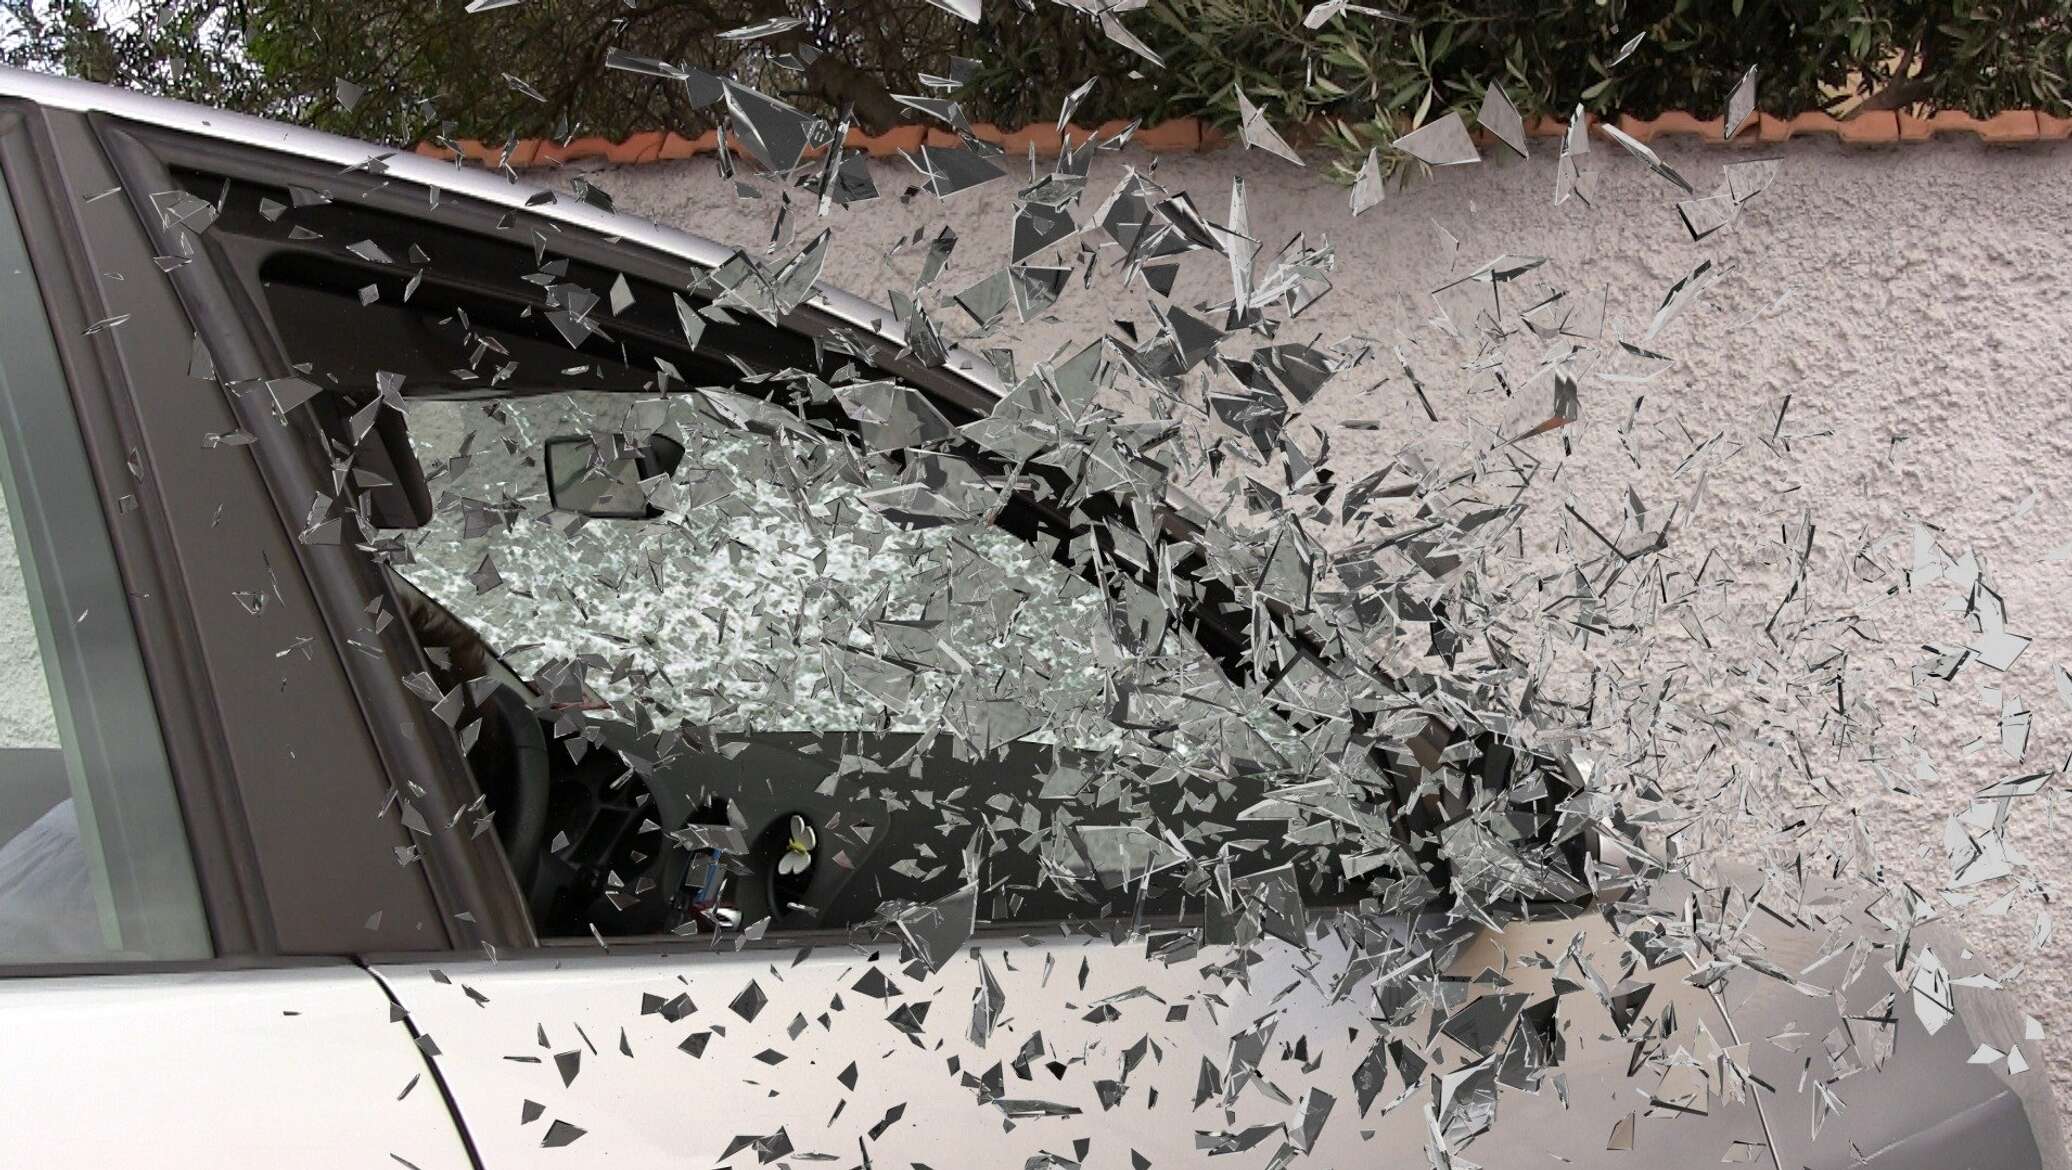 Ребенок разбил машину. Разбитое стекло автомобиля. Машина с разбитым стеклом. Битое автомобильное стекло. Разбитые стекла в машине.